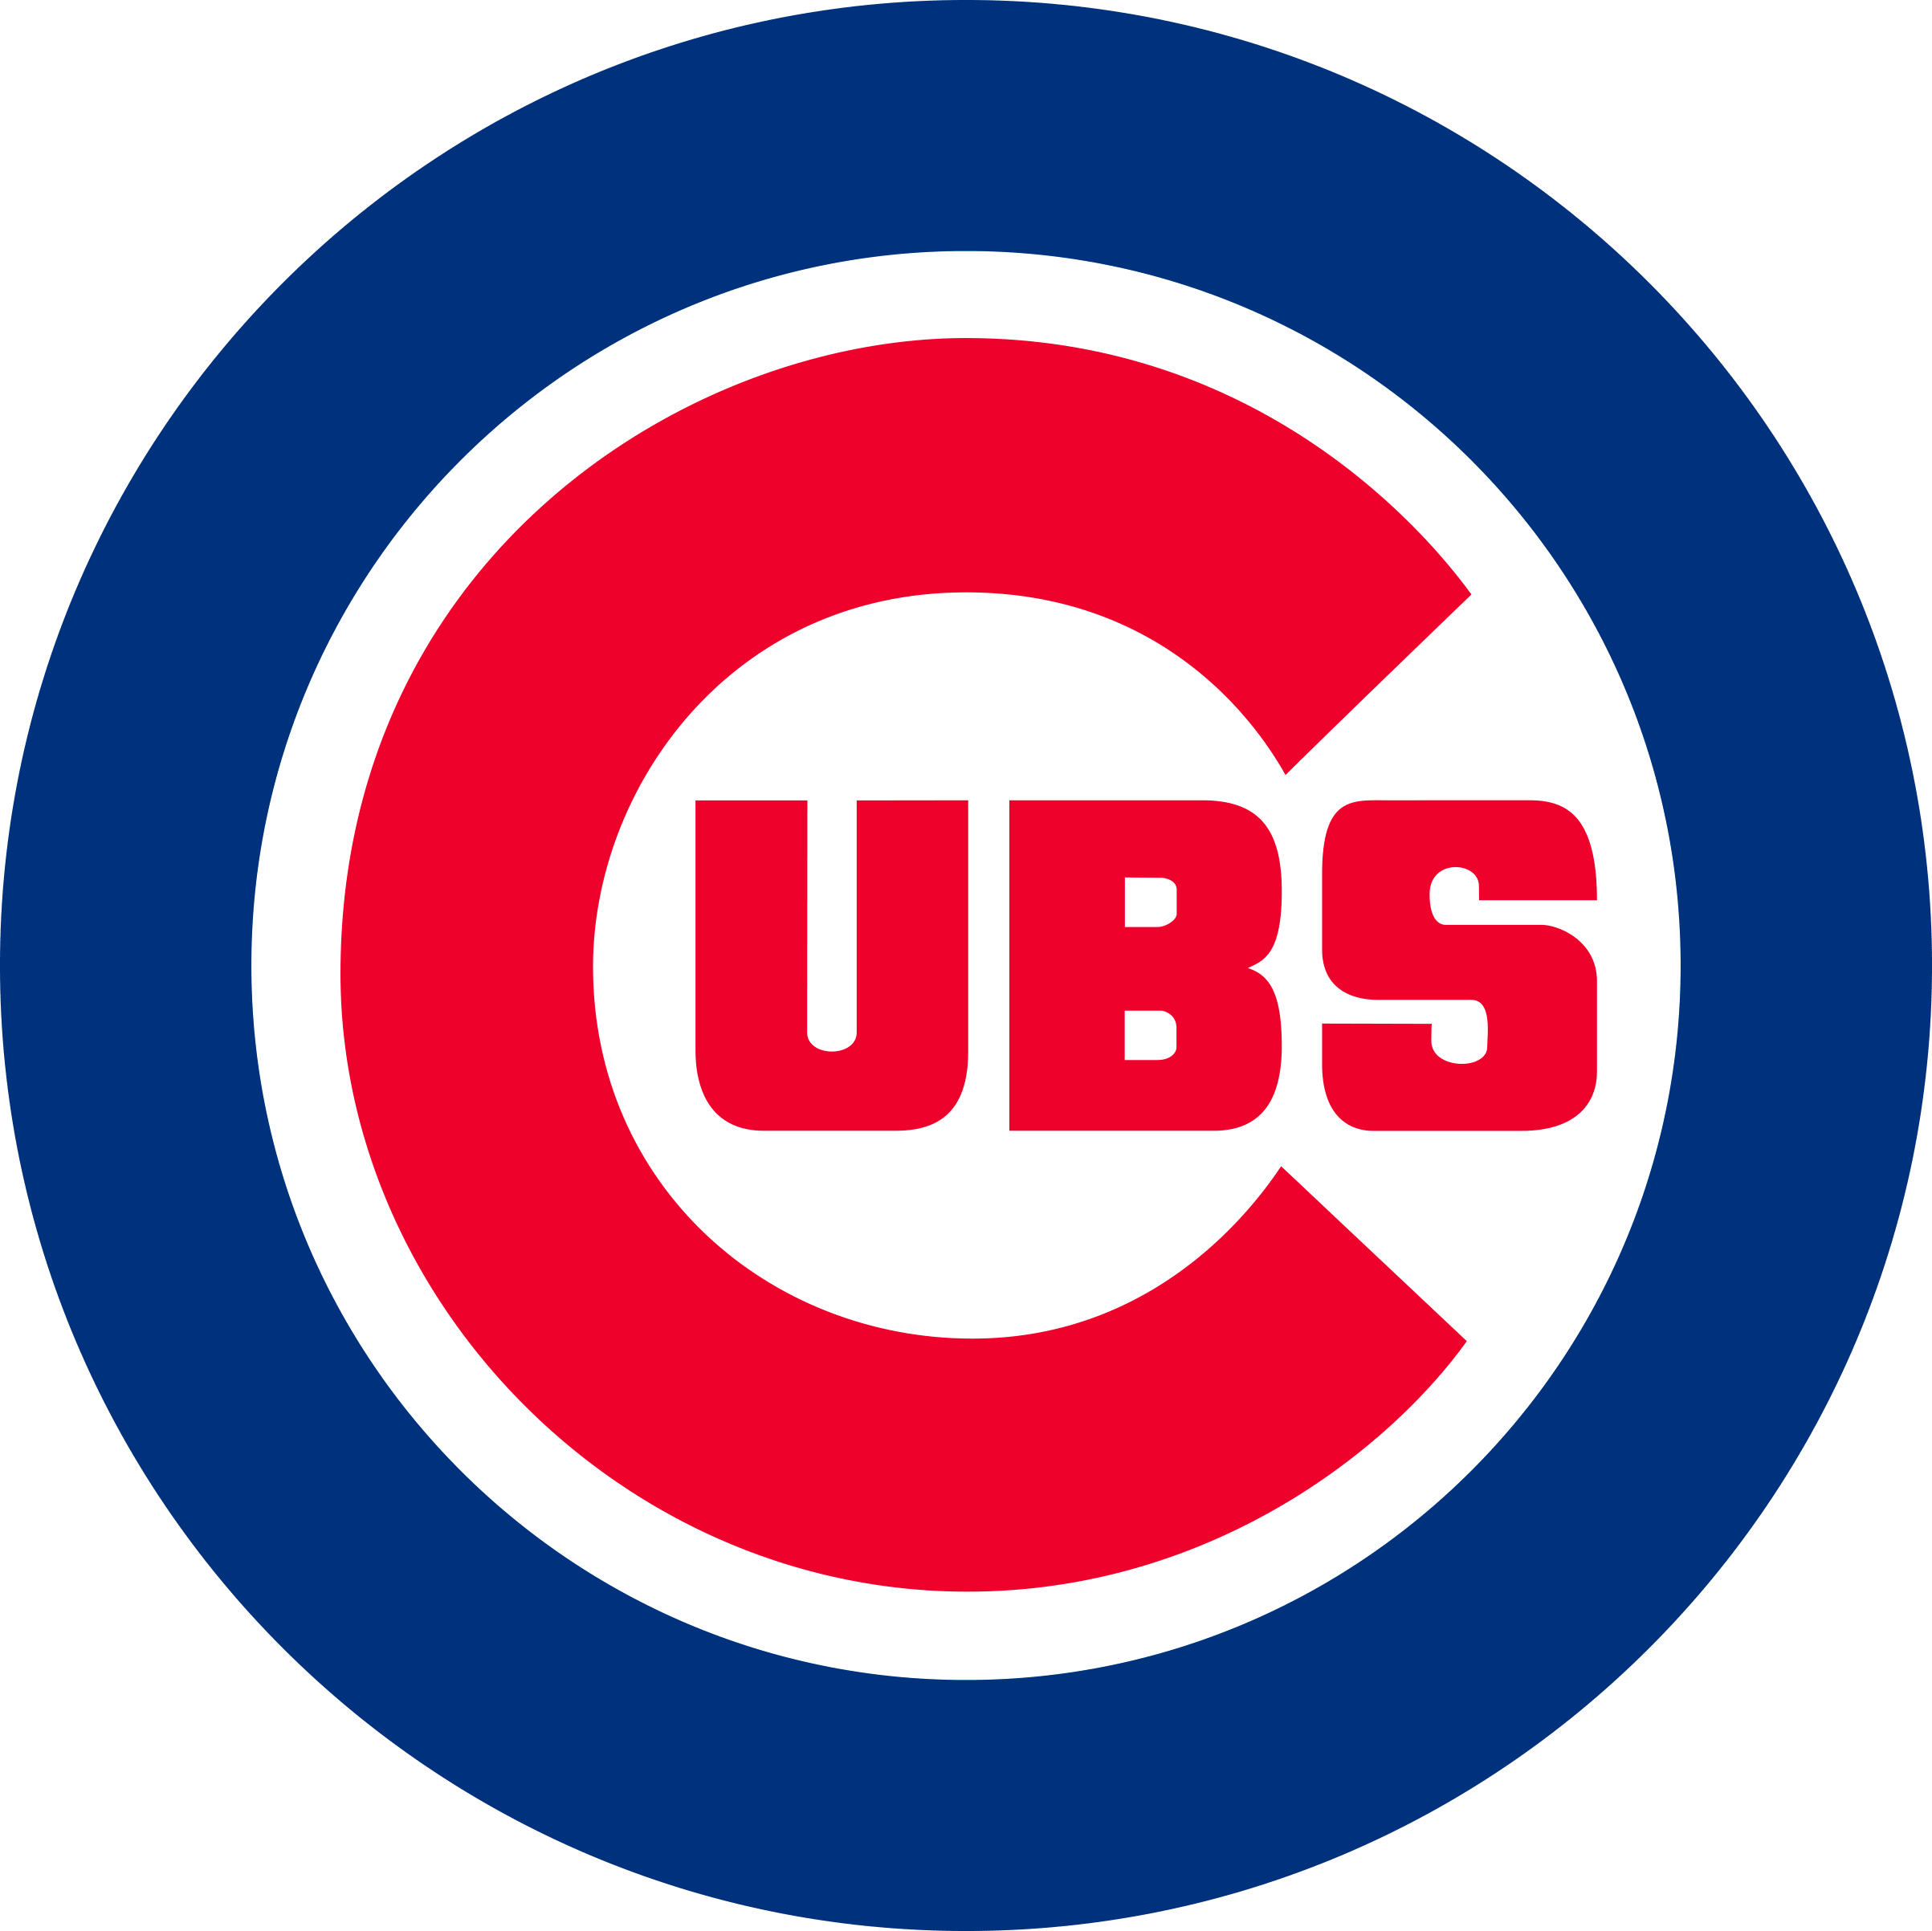 Chicago Cubs Baseball Set Design SVG Files, Cricut, Silhouette